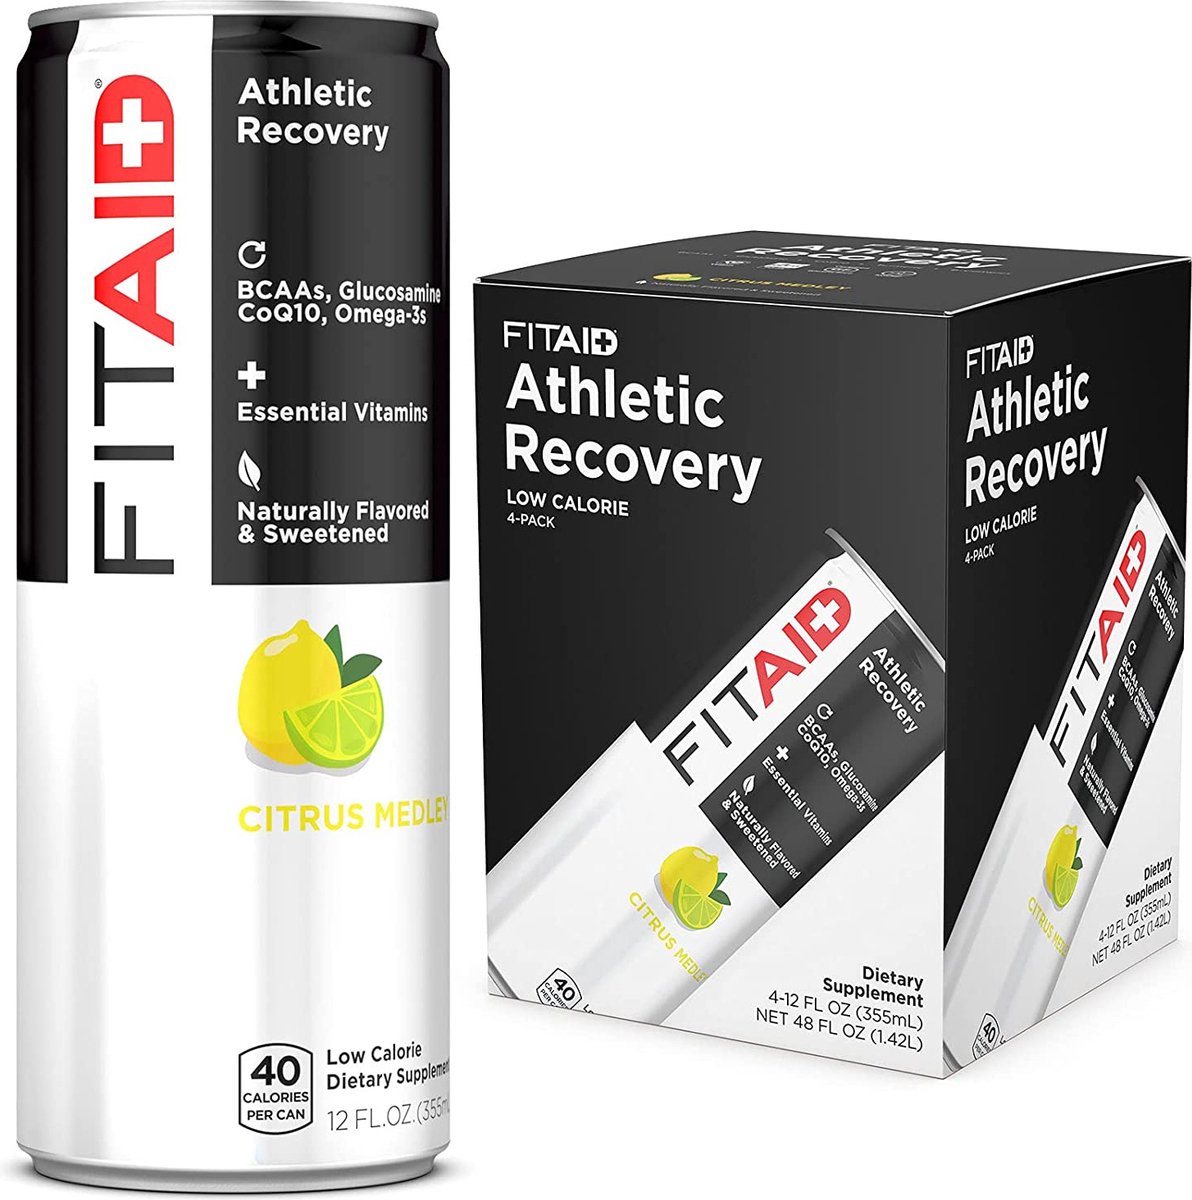 FitAid Athletic Recovery sportdrank - smaak Citrus - inhoud 355ml - 10 stuks